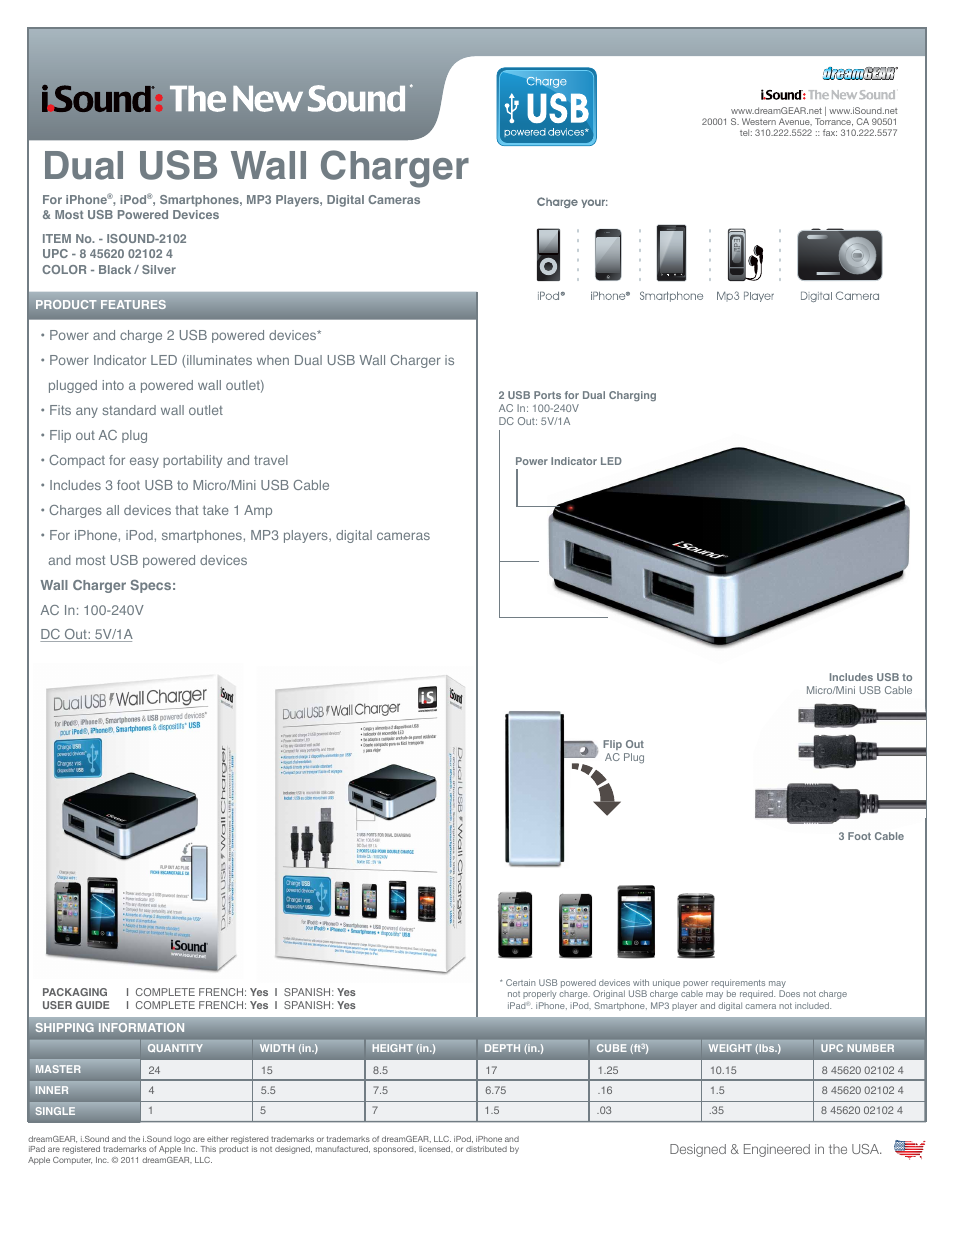 Dual USB Wall Charger - Sell Sheet